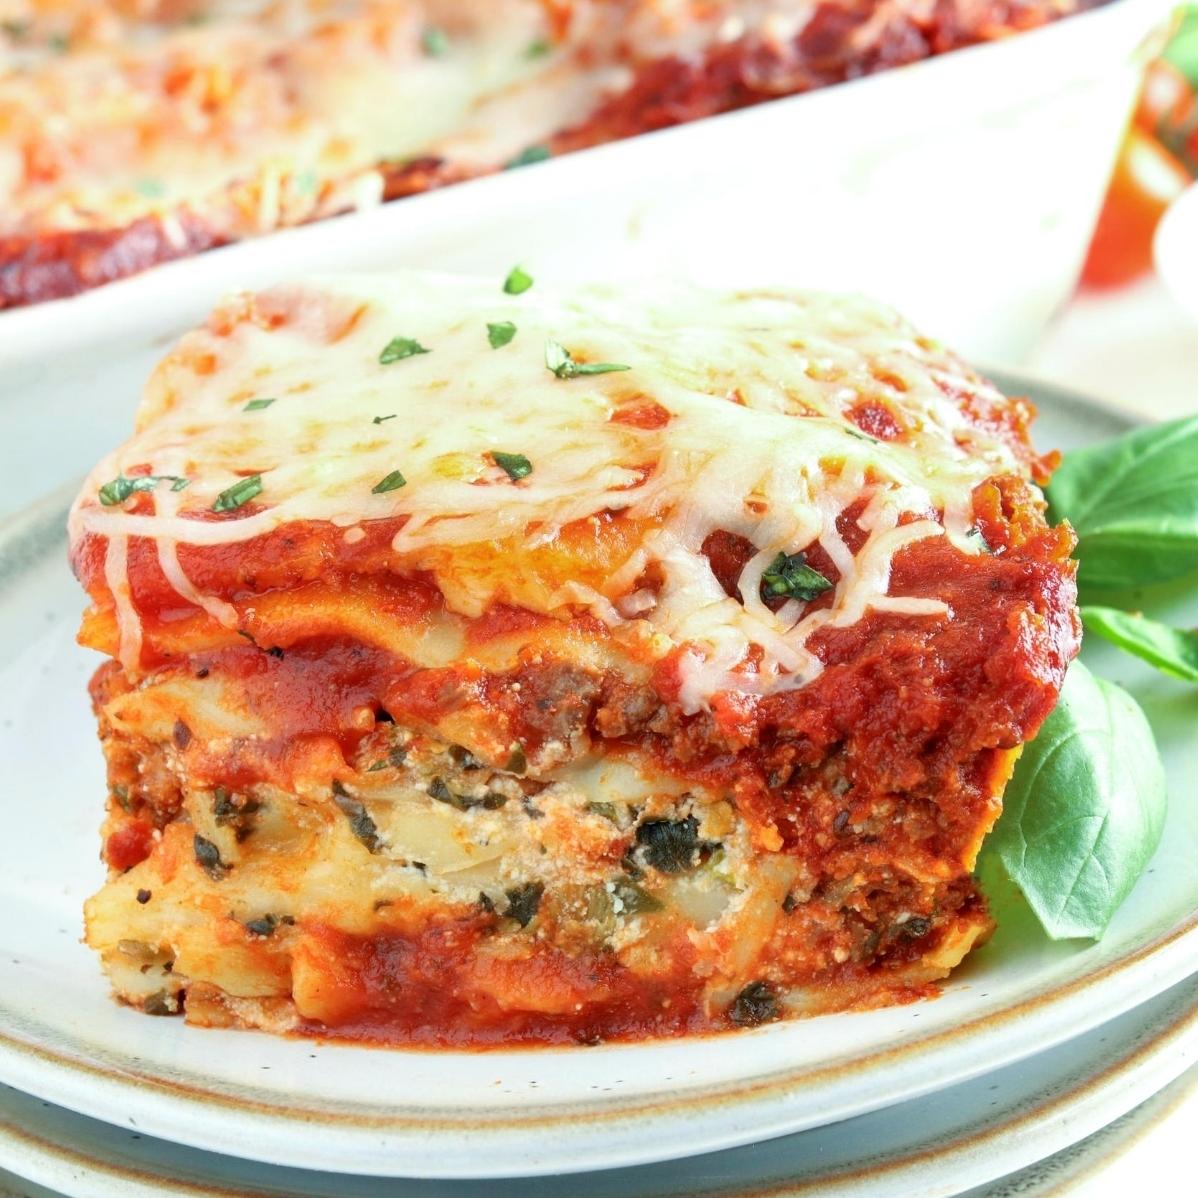  This veggie lasagna is chock-full of healthy veggies, making it a guilt-free indulgence.